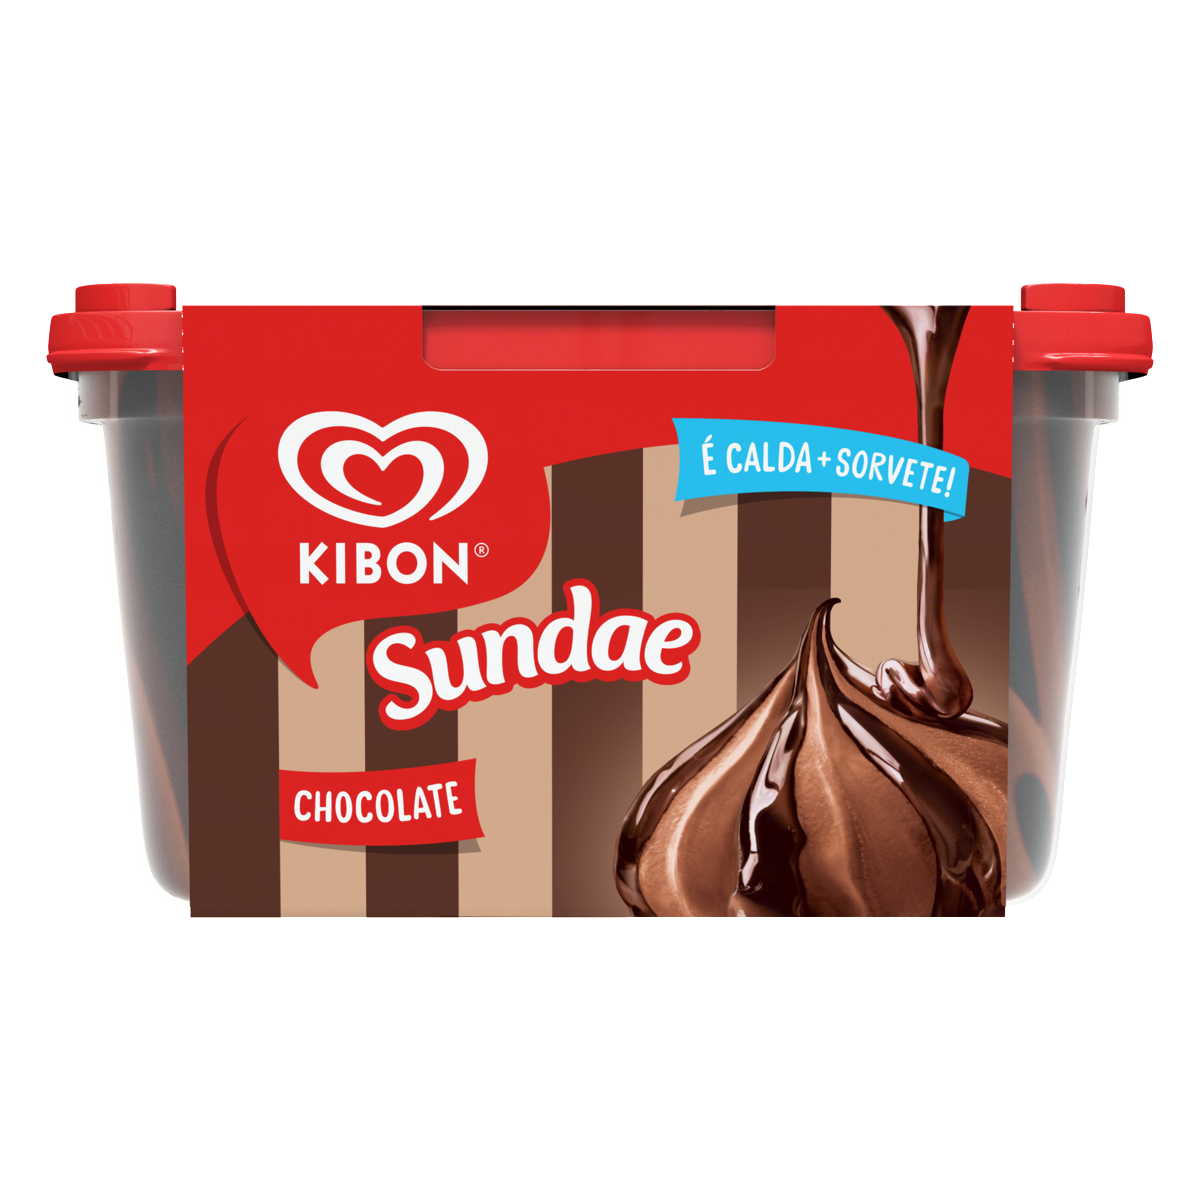 7891150068315 - SORVETE SUNDAE CHOCOLATE CALDA CHOCOLATE TRUFADO KIBON POTE 1,4L